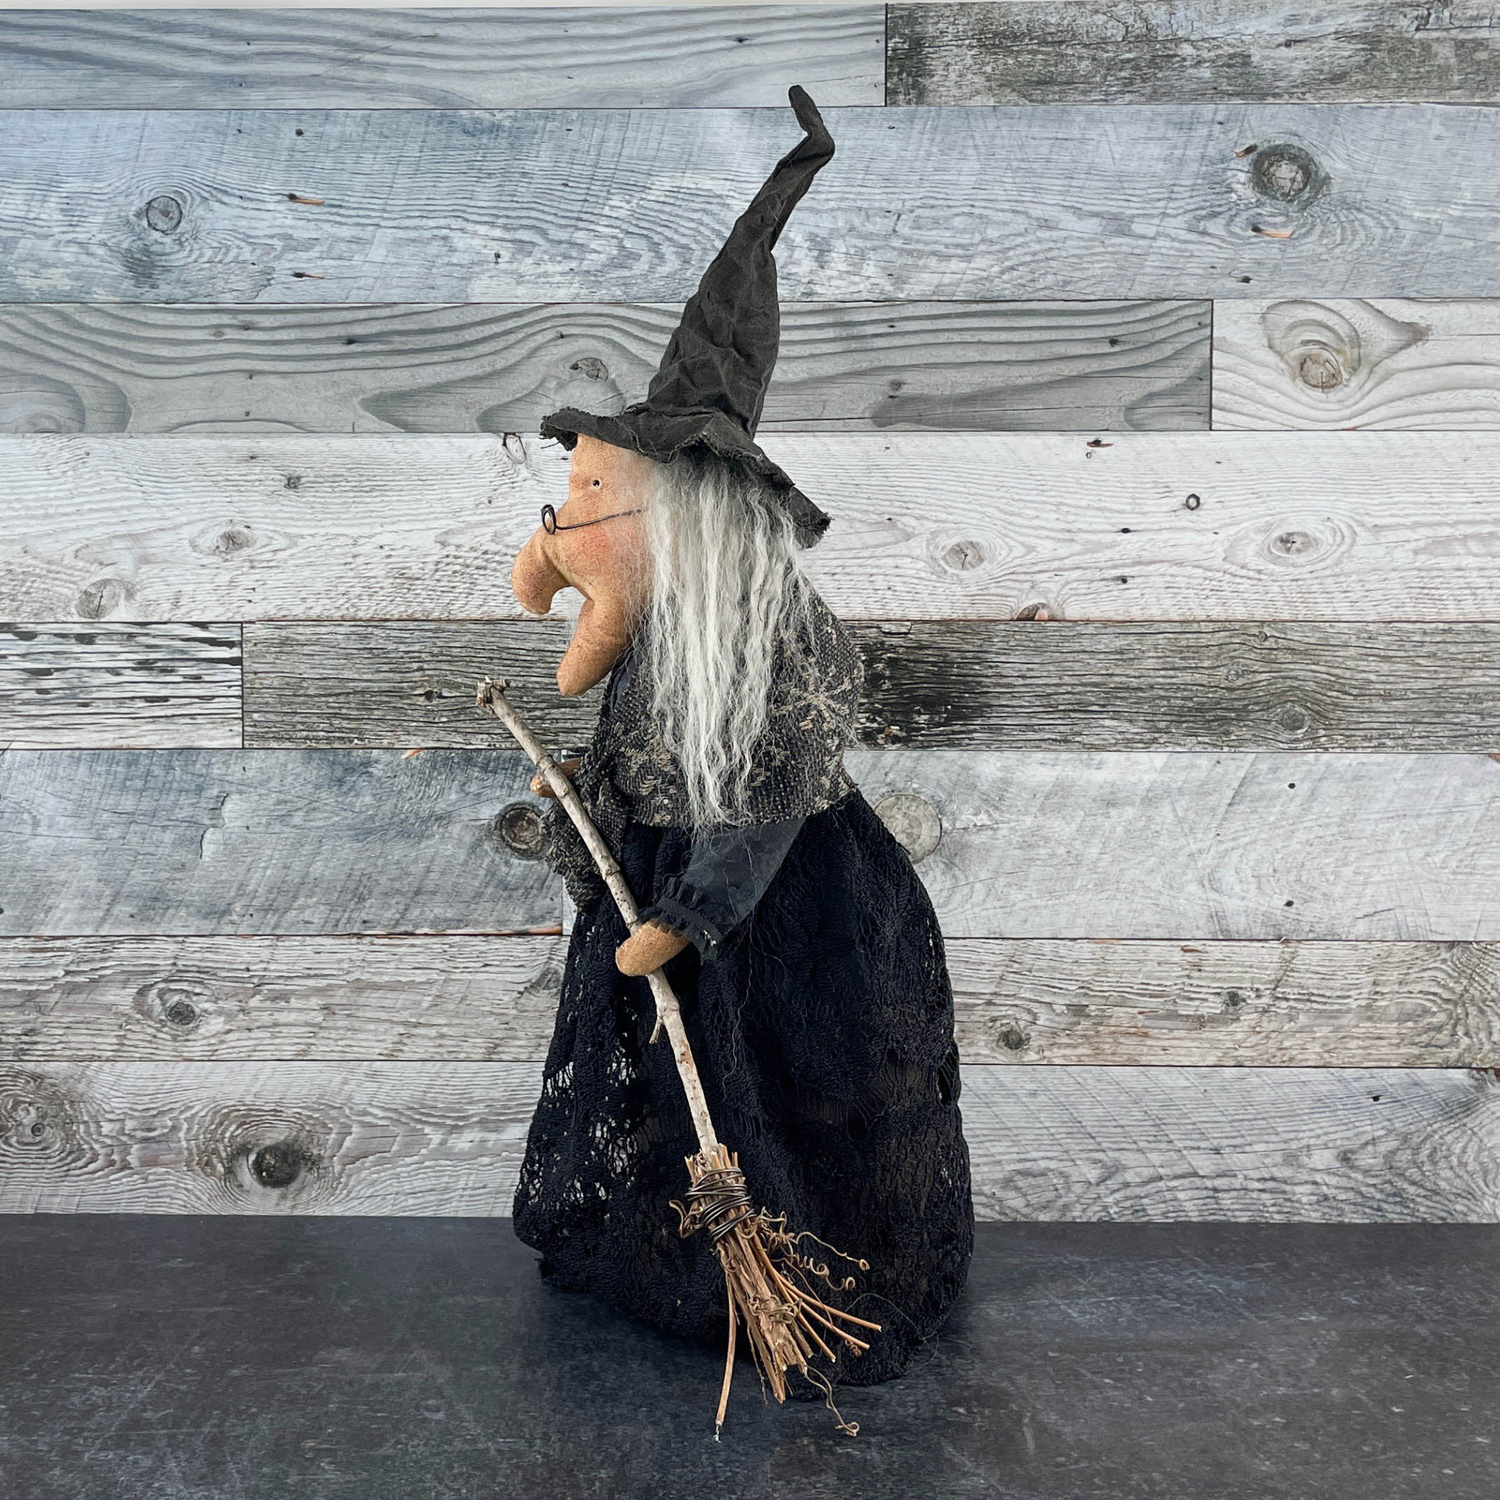 Harriet Hollows, Handmade Halloween Witch Doll